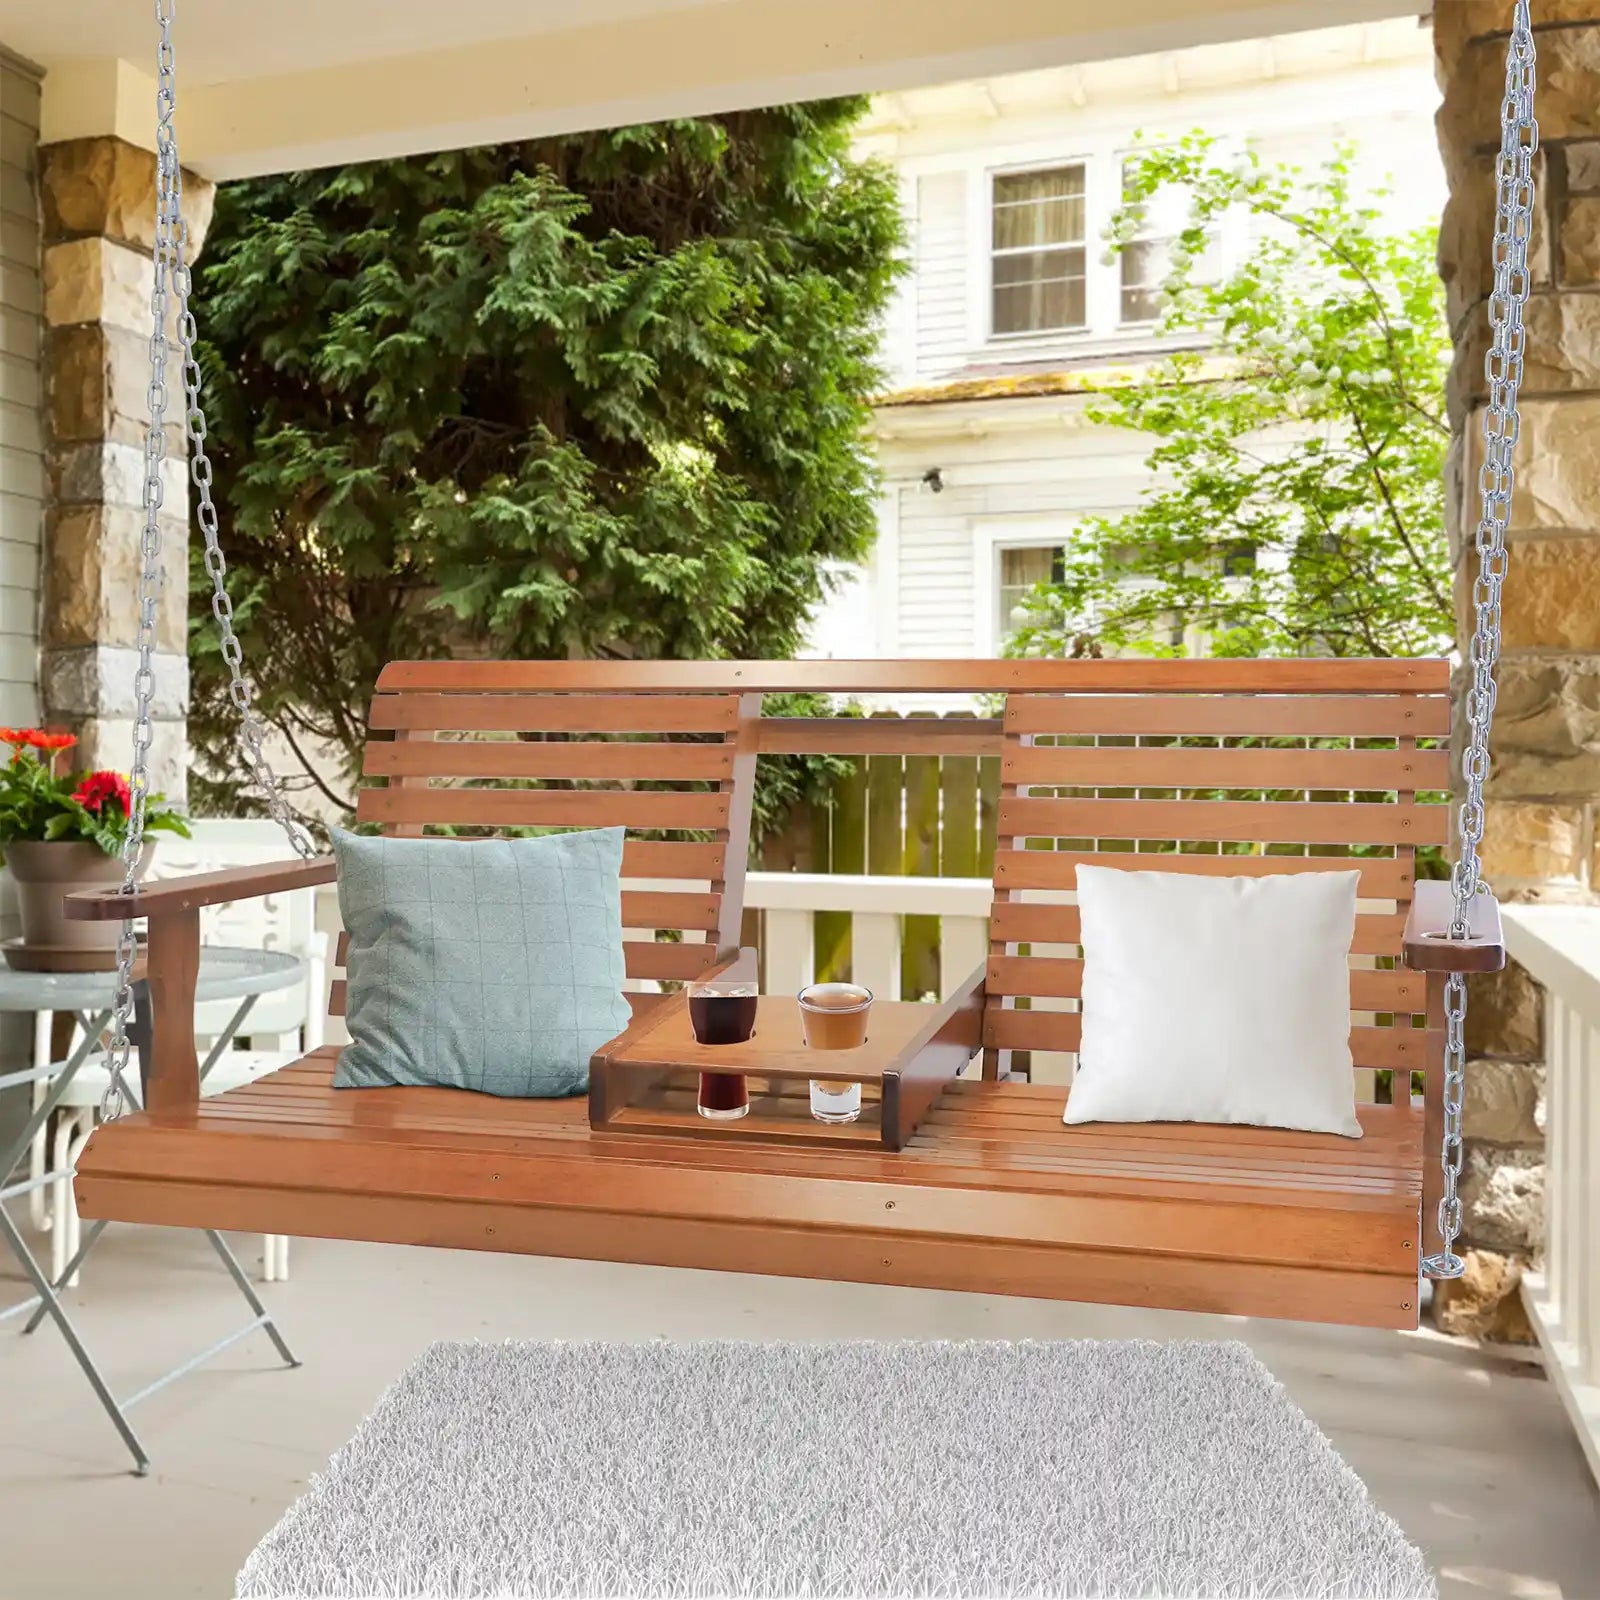 Columpio de madera para porche, banco colgante resistente para 2 personas para jardín, patio trasero, porche delantero, balcón 